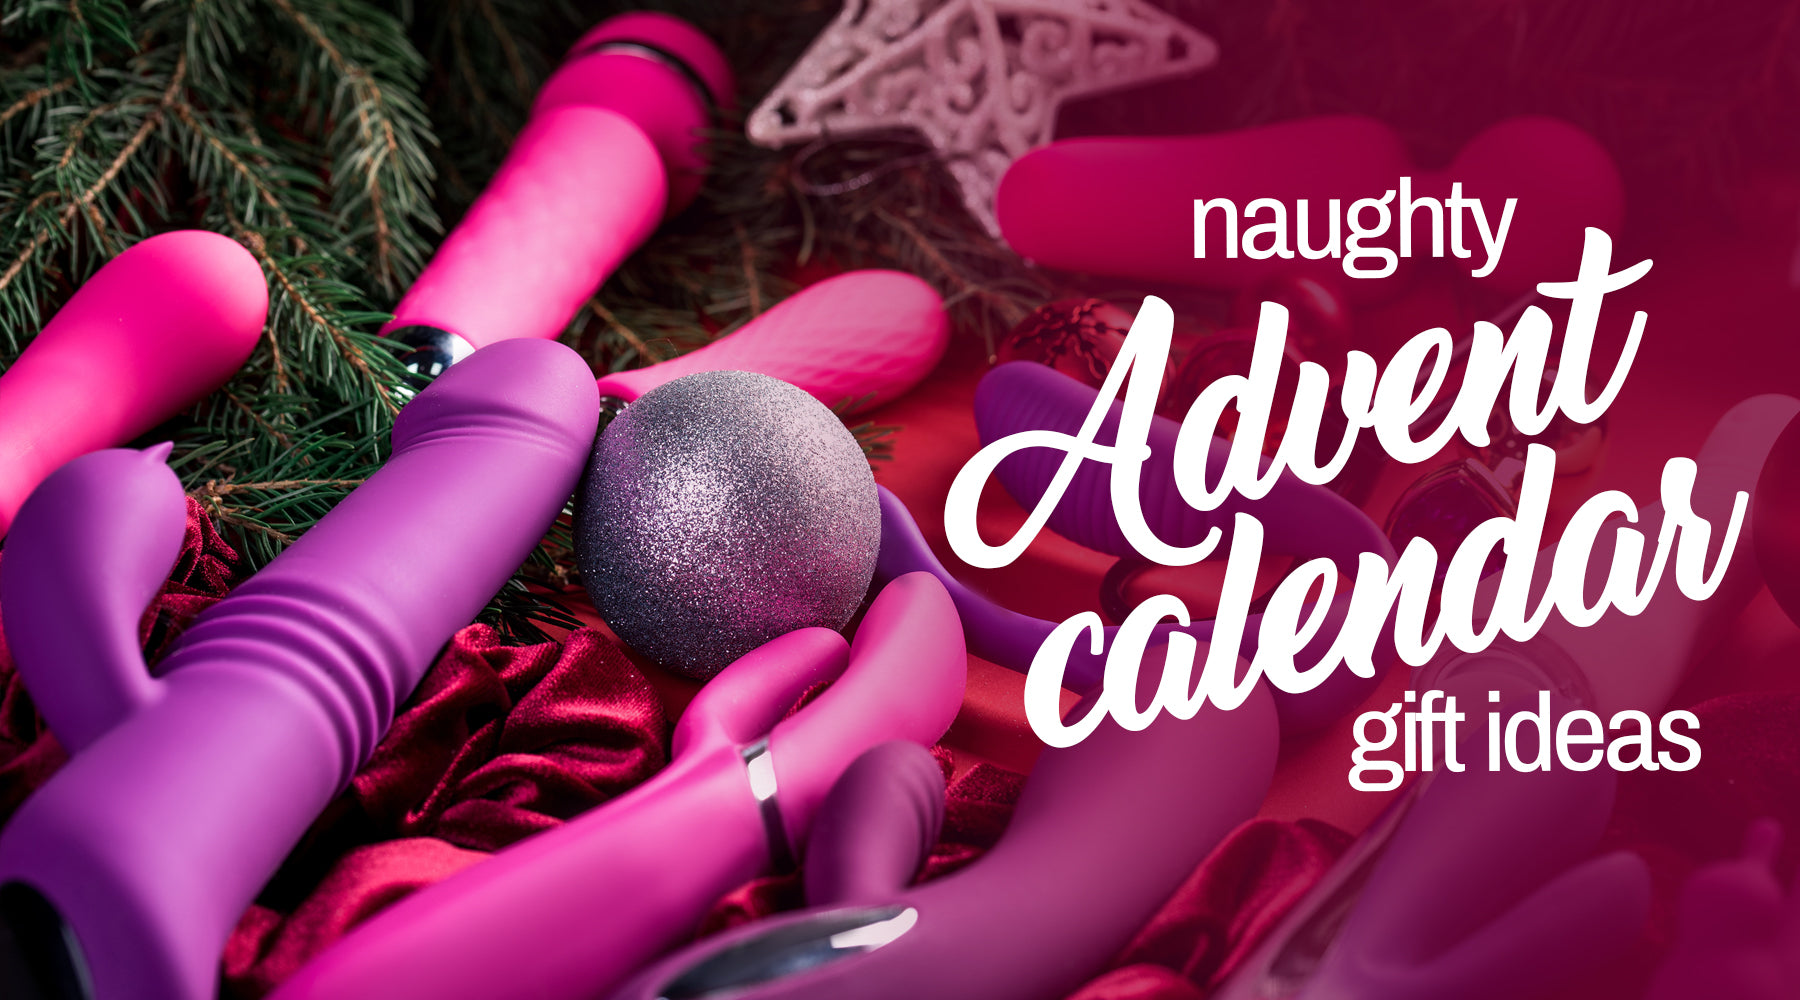  Sexynews #57 - Naughty Advent Calendar